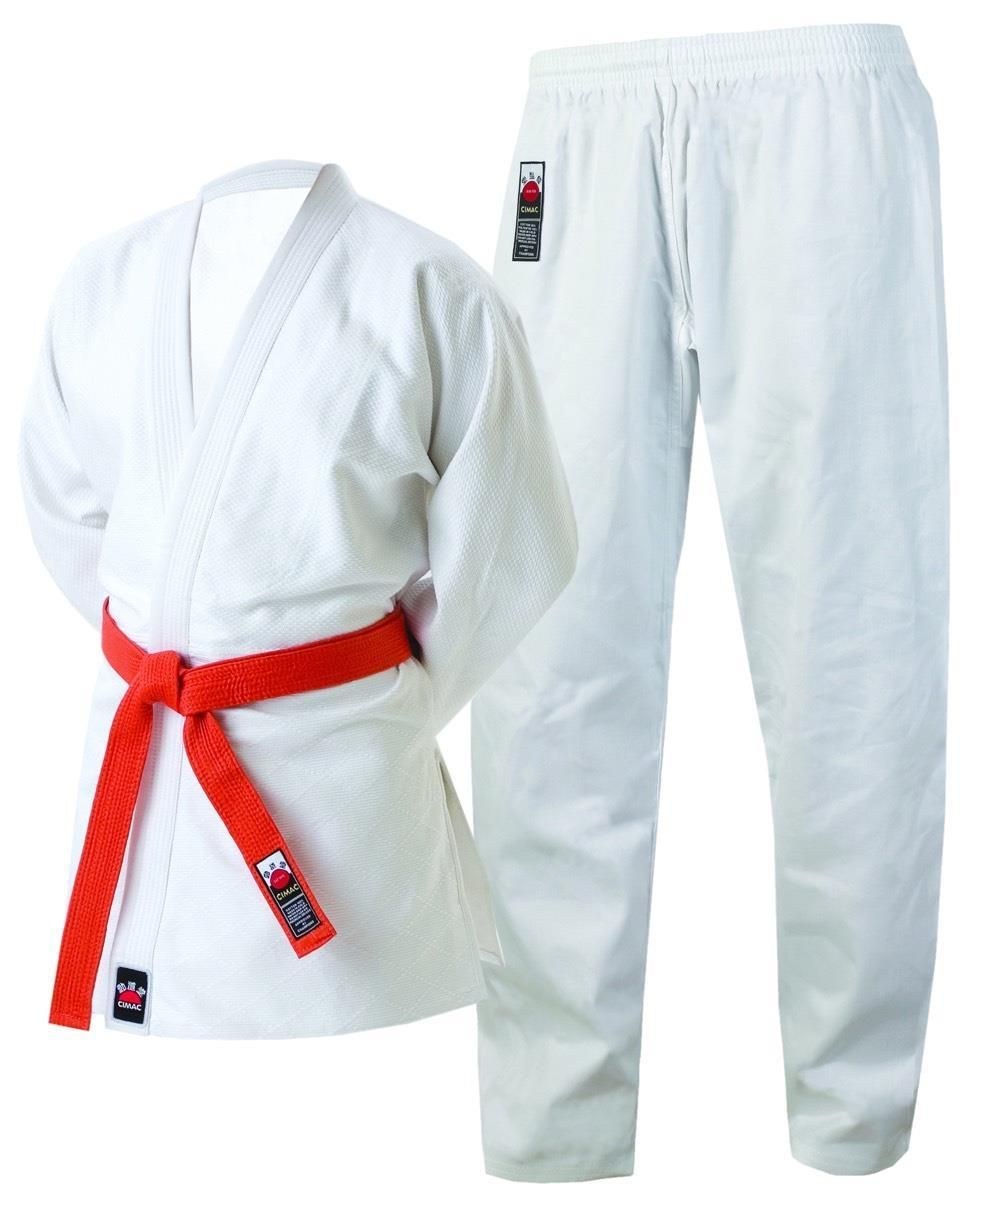 Cimac Judo 250G Uniform Suit Adults Children's Boys Girls Men's Free Belt - Hamtons Direct